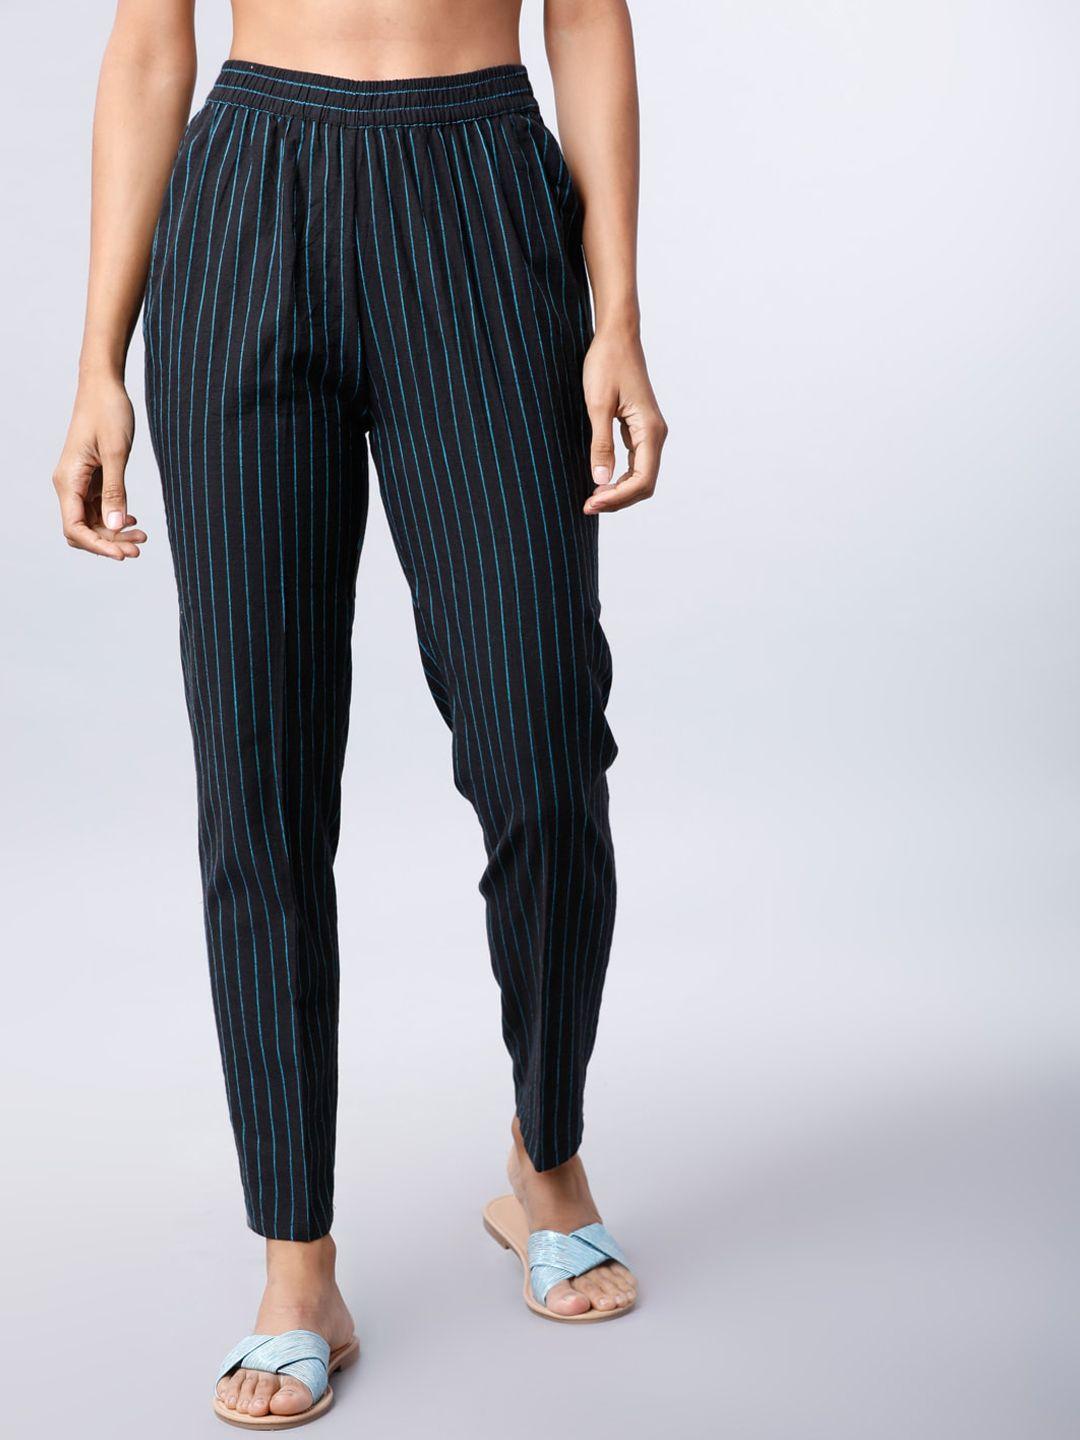 vishudh women black slim fit striped regular trousers